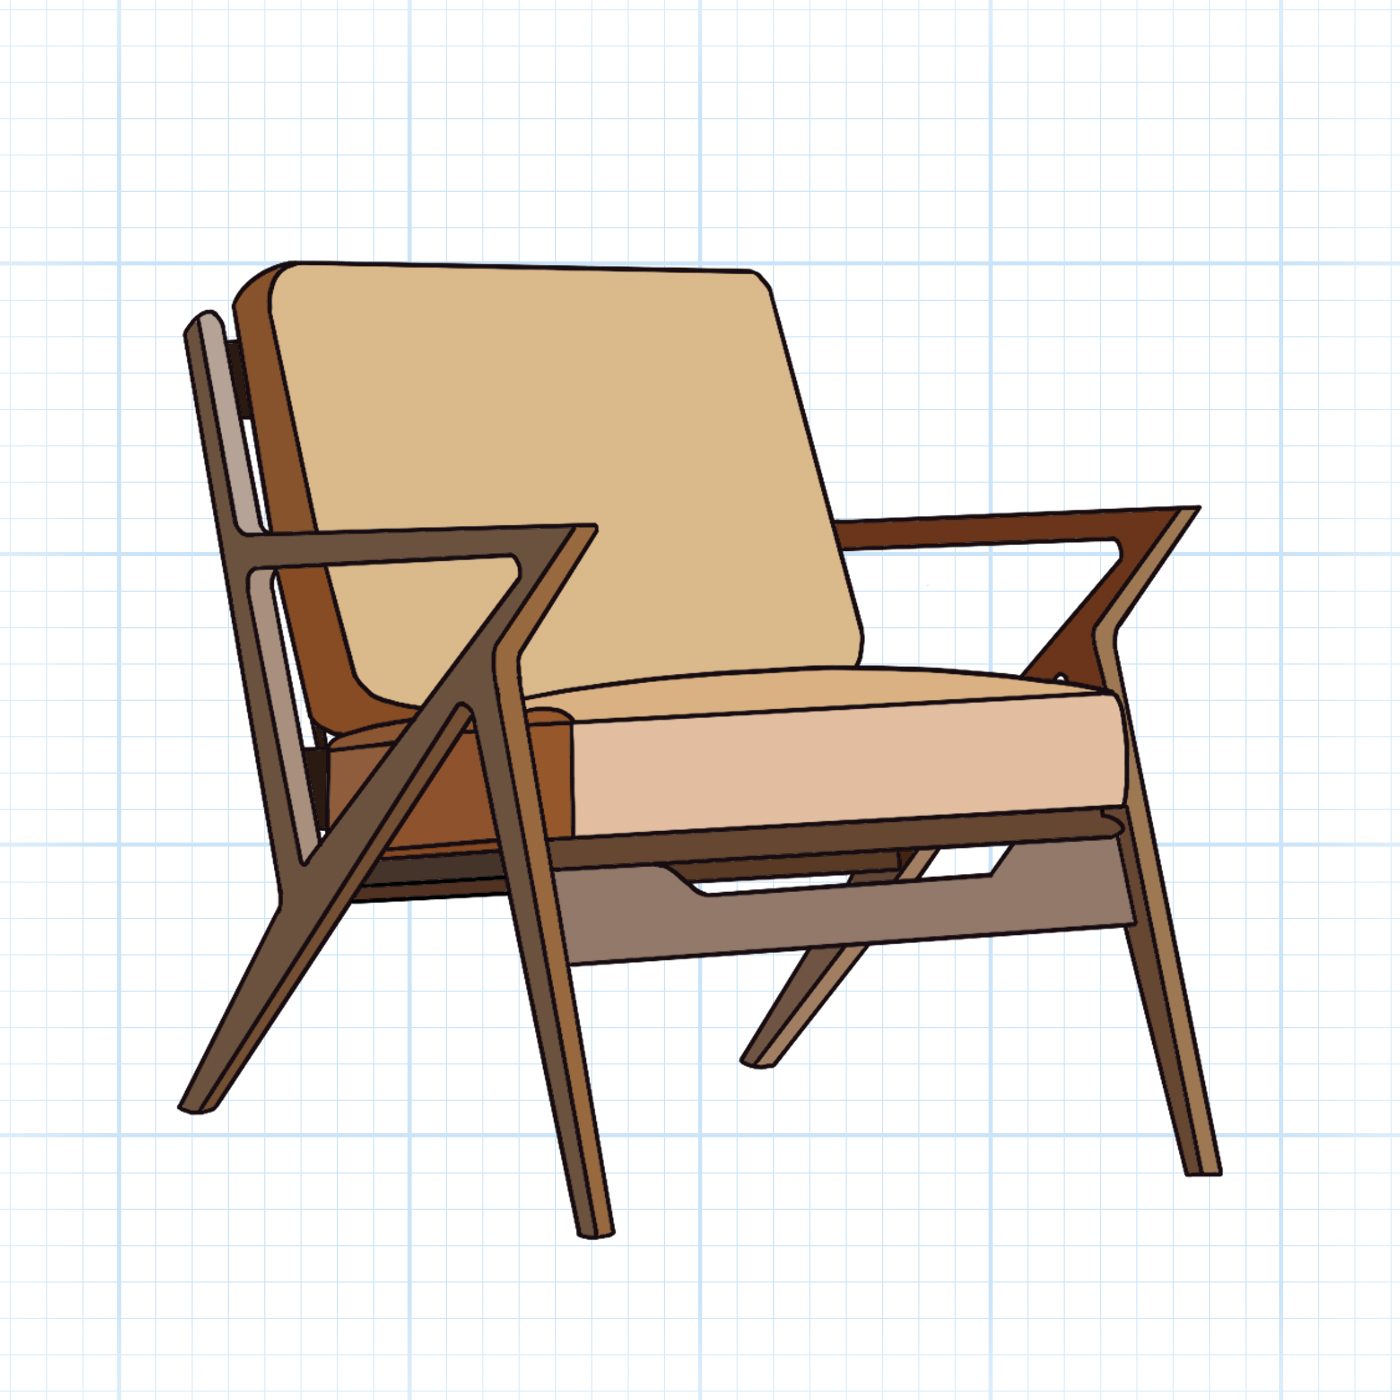 Midcentury Modern Chair Graphic